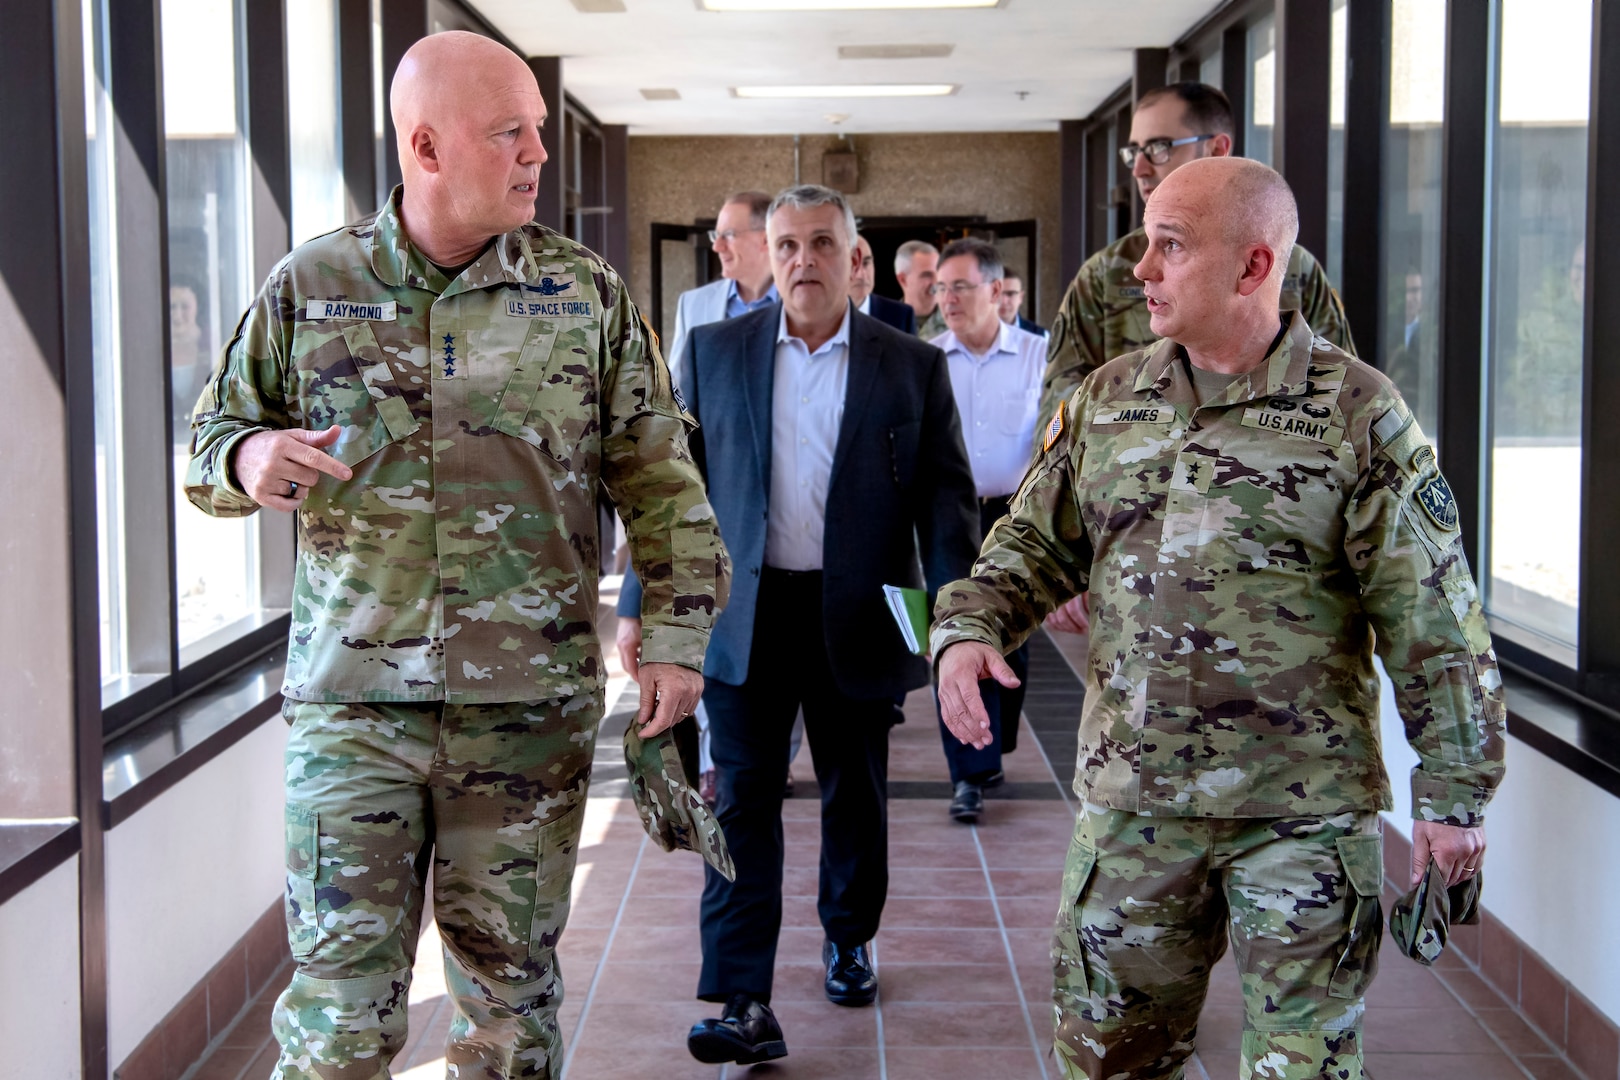 Two military men in uniform walking down a hallway